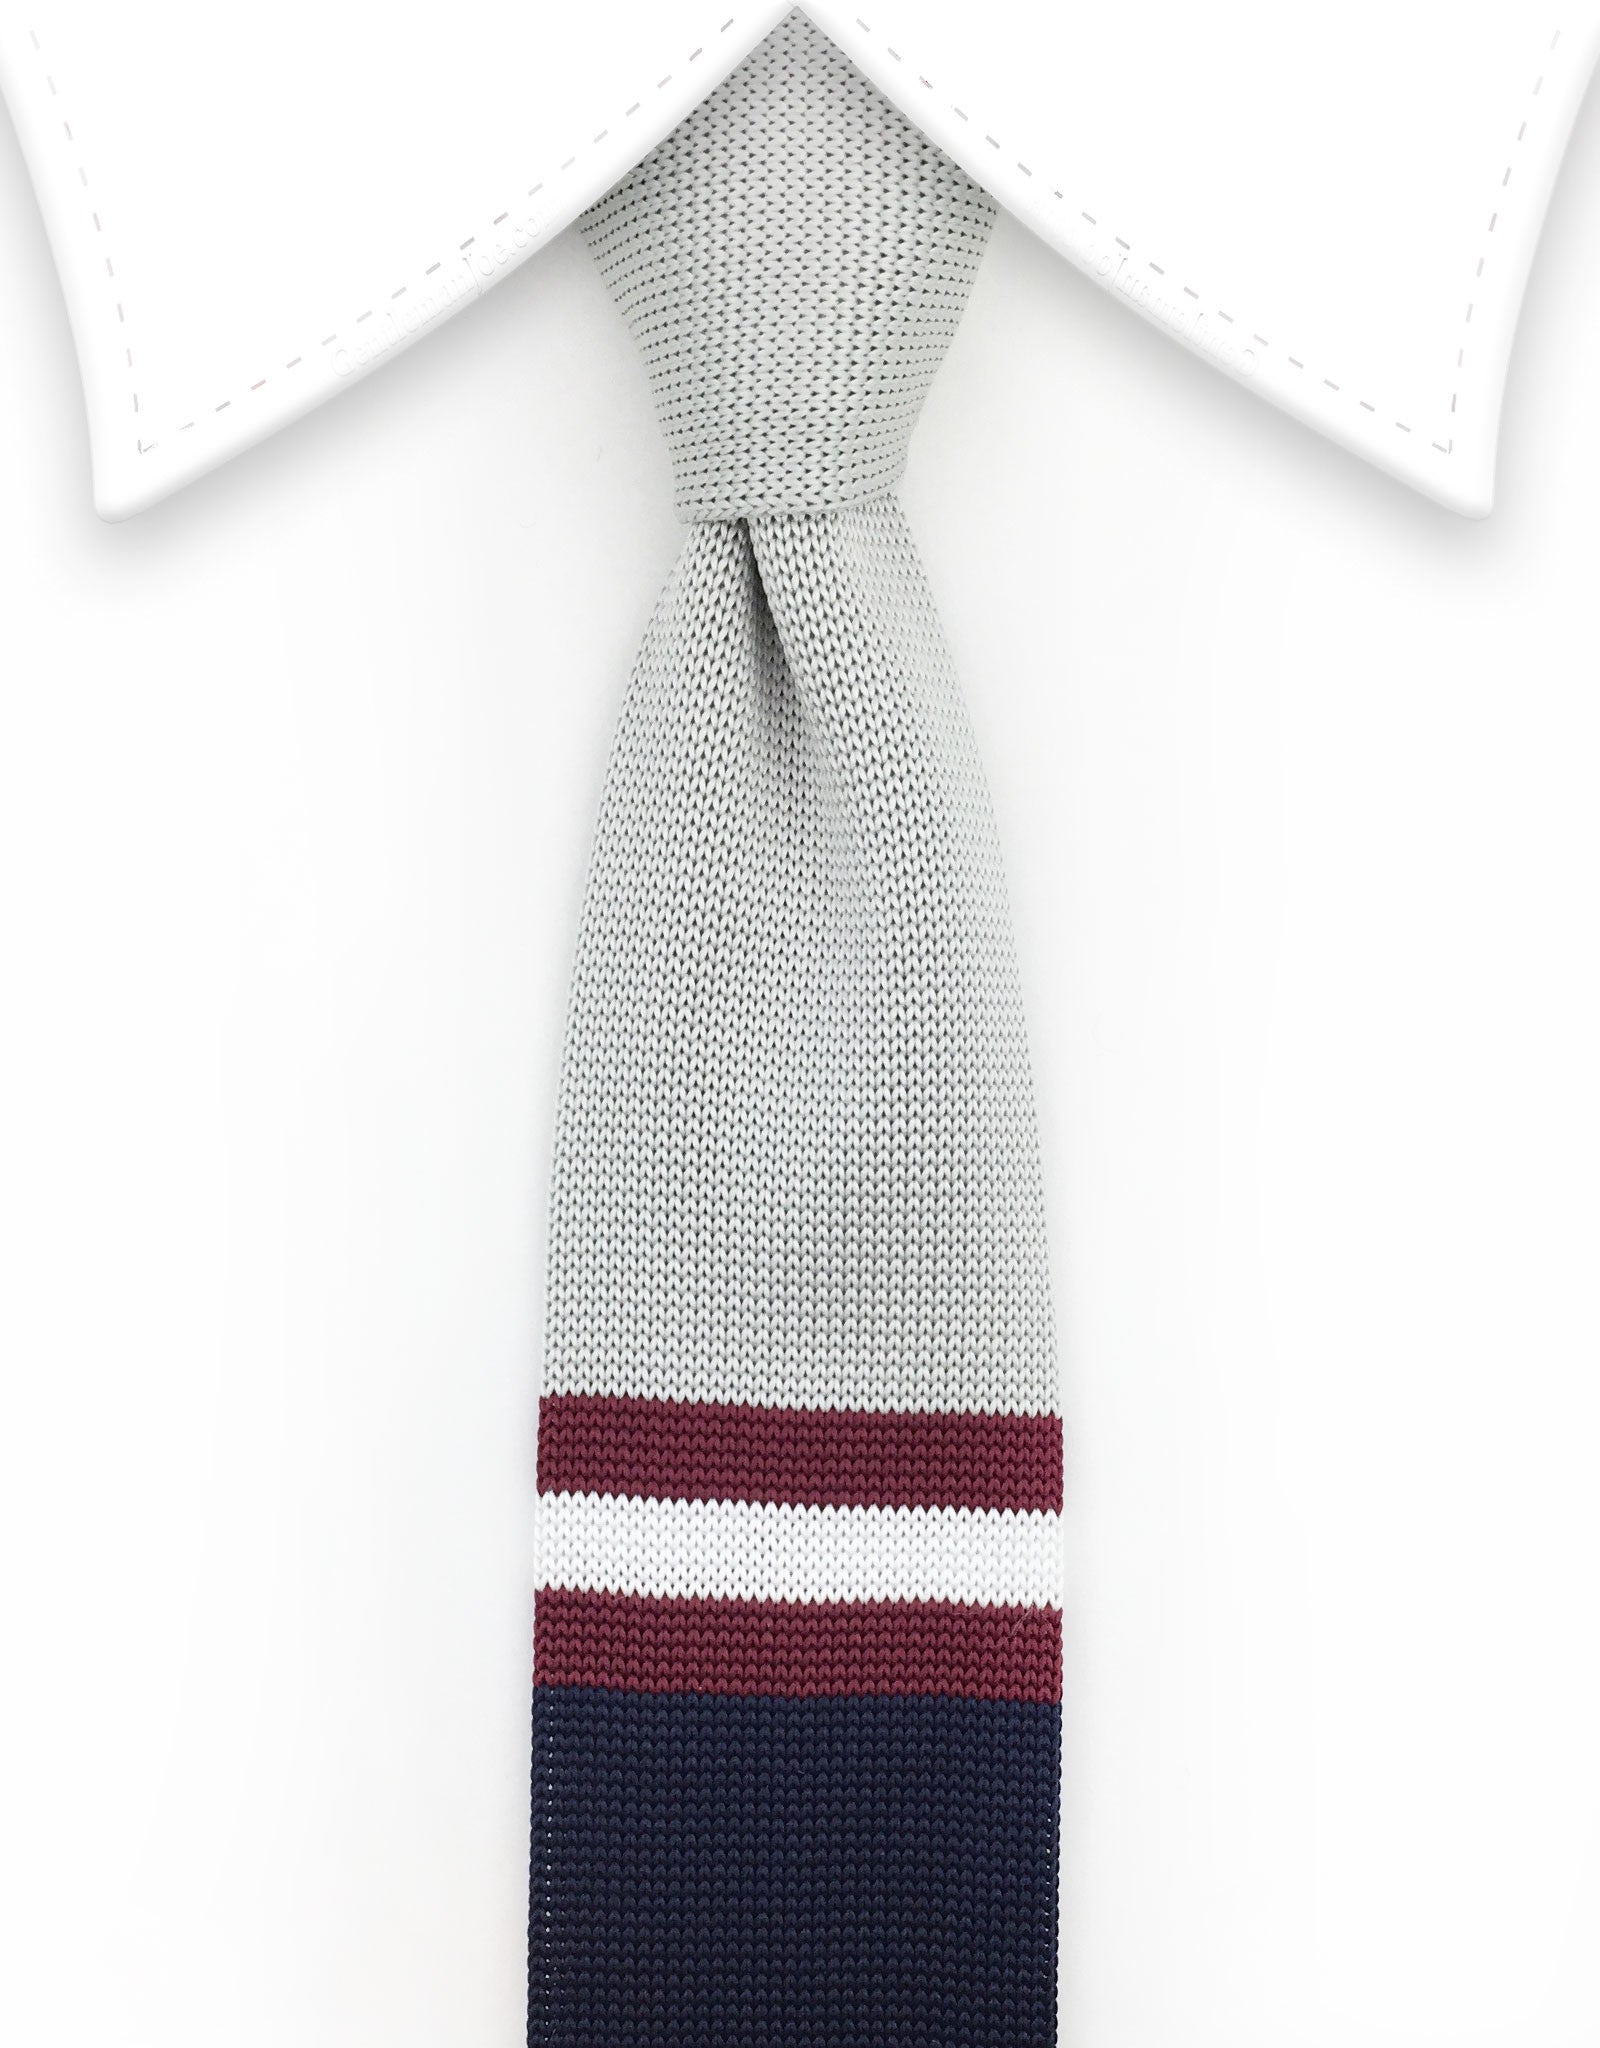 Silver, Navy & Burgundy Striped Knit Tie